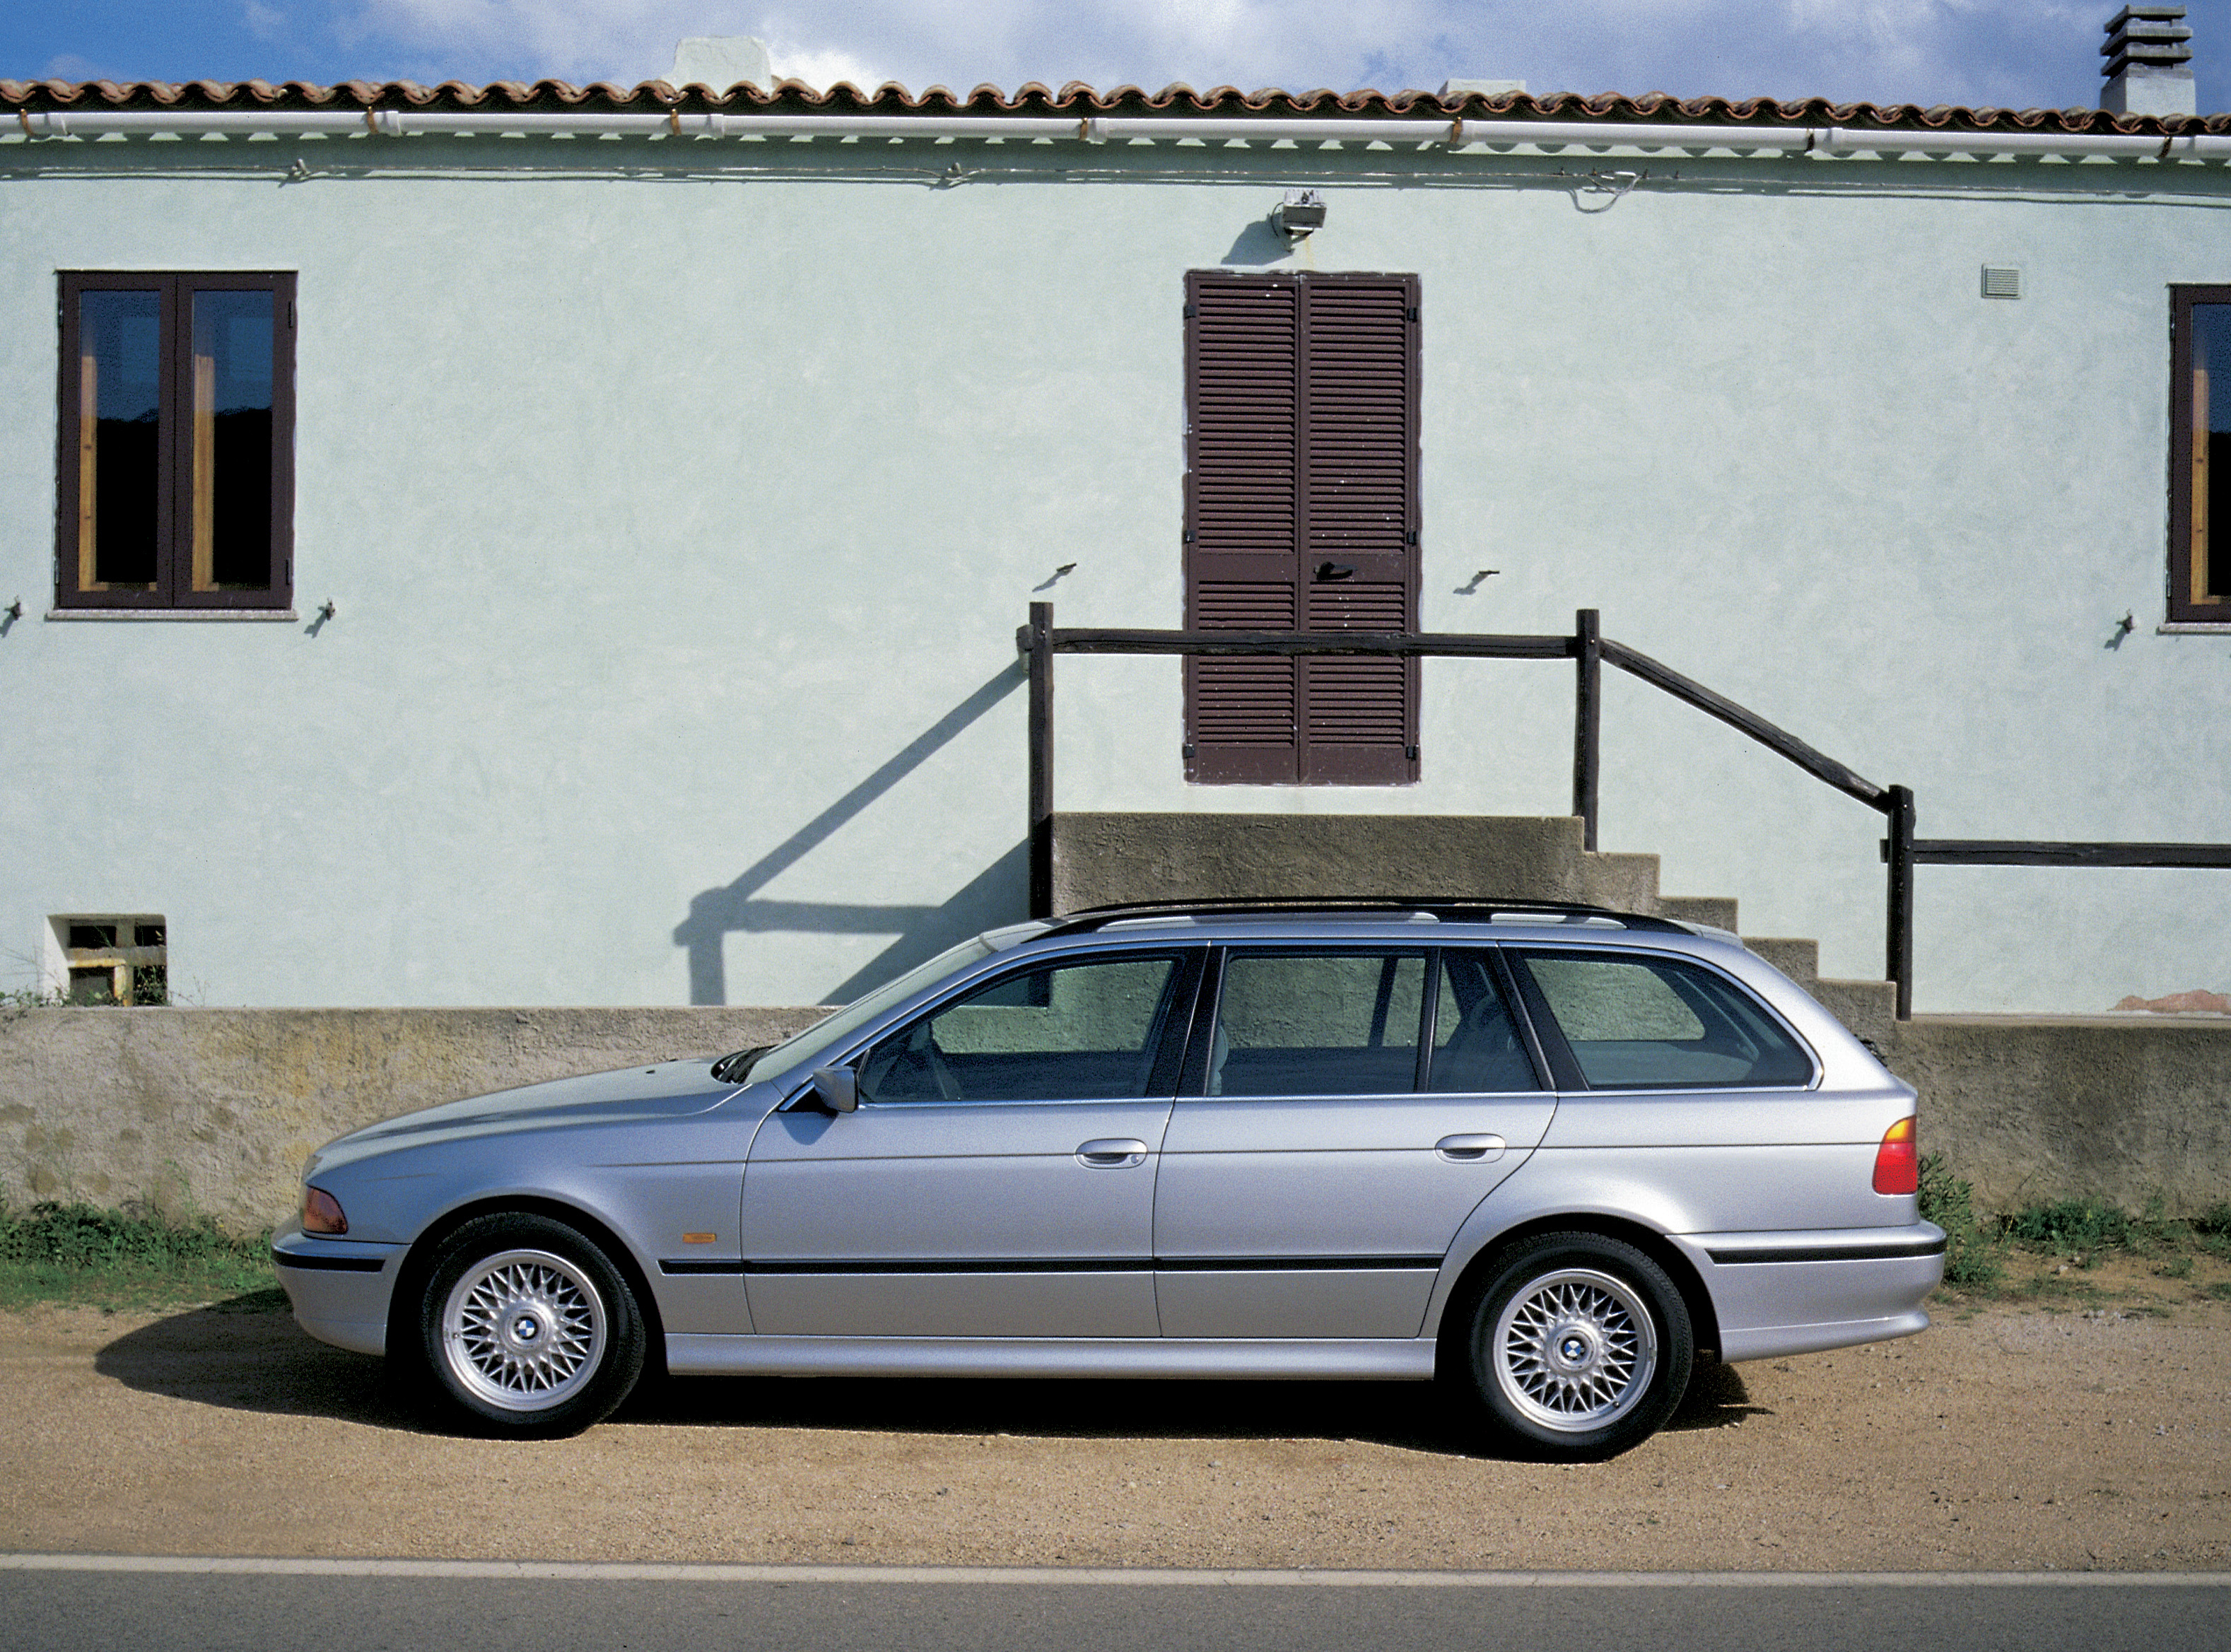 Кузов универсал 5. BMW 5 e39 универсал. BMW 5er e39 Touring. BMW 520i e39 универсал. BMW универсал 2000.